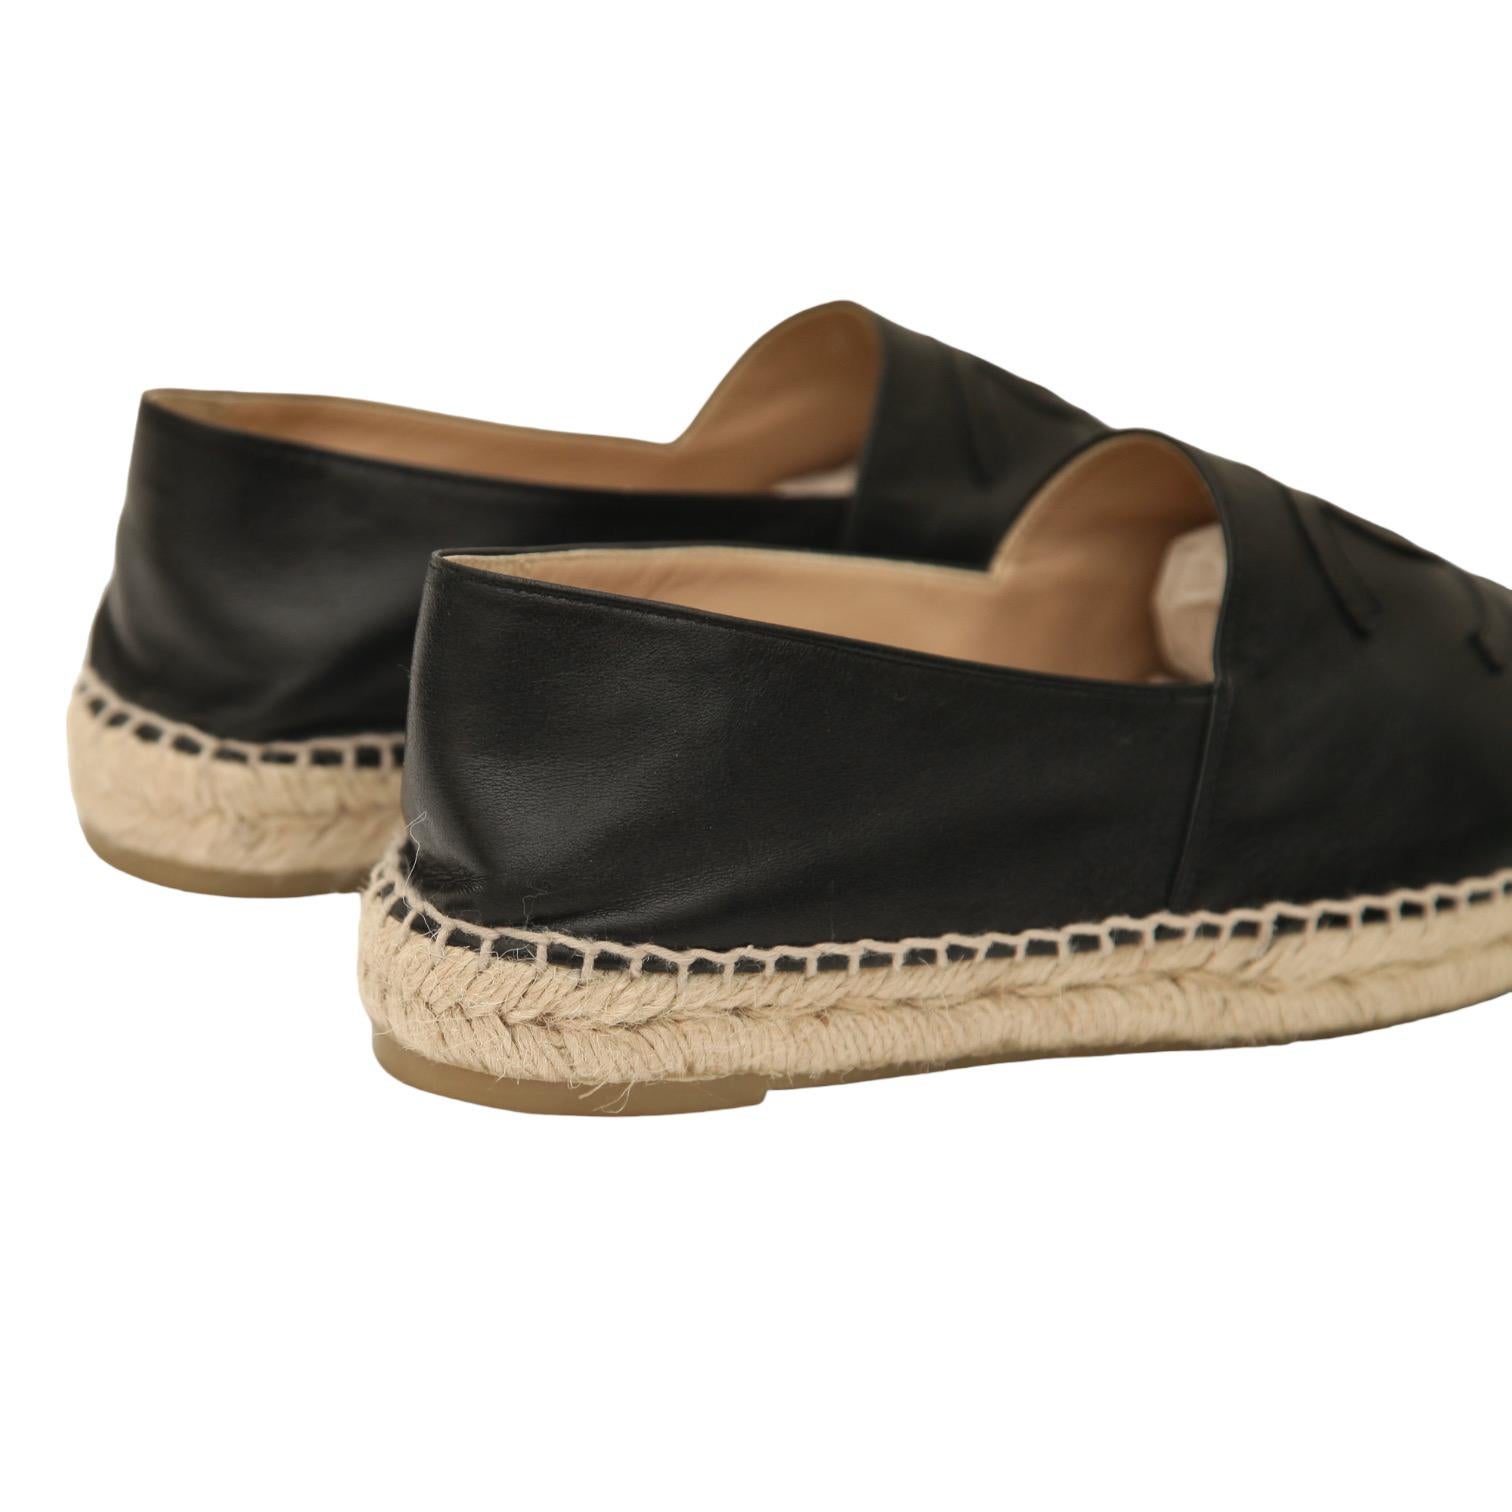 CHANEL Black Lambskin Leather Espadrilles Loafers Flats Cap Toe CC Shoes Sz 40 3